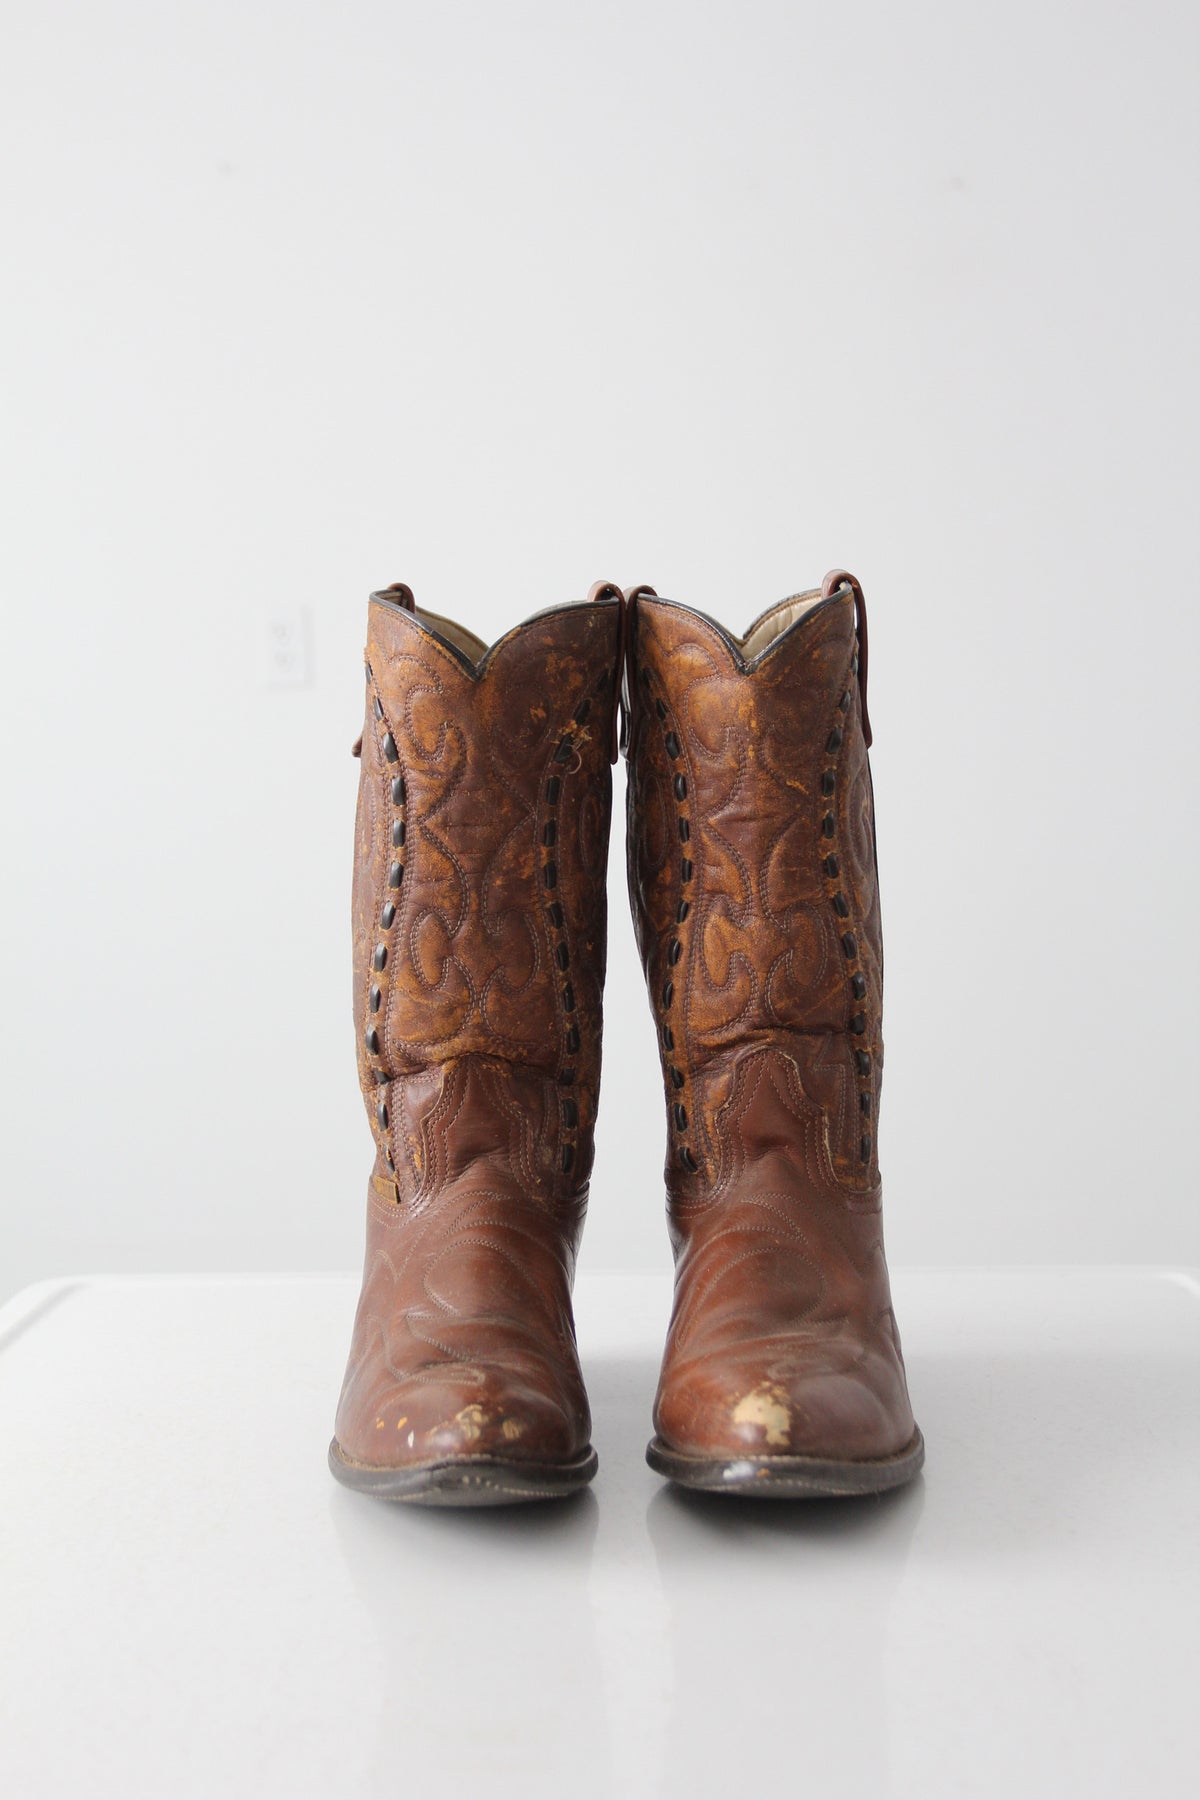 vintage Lariat western boots